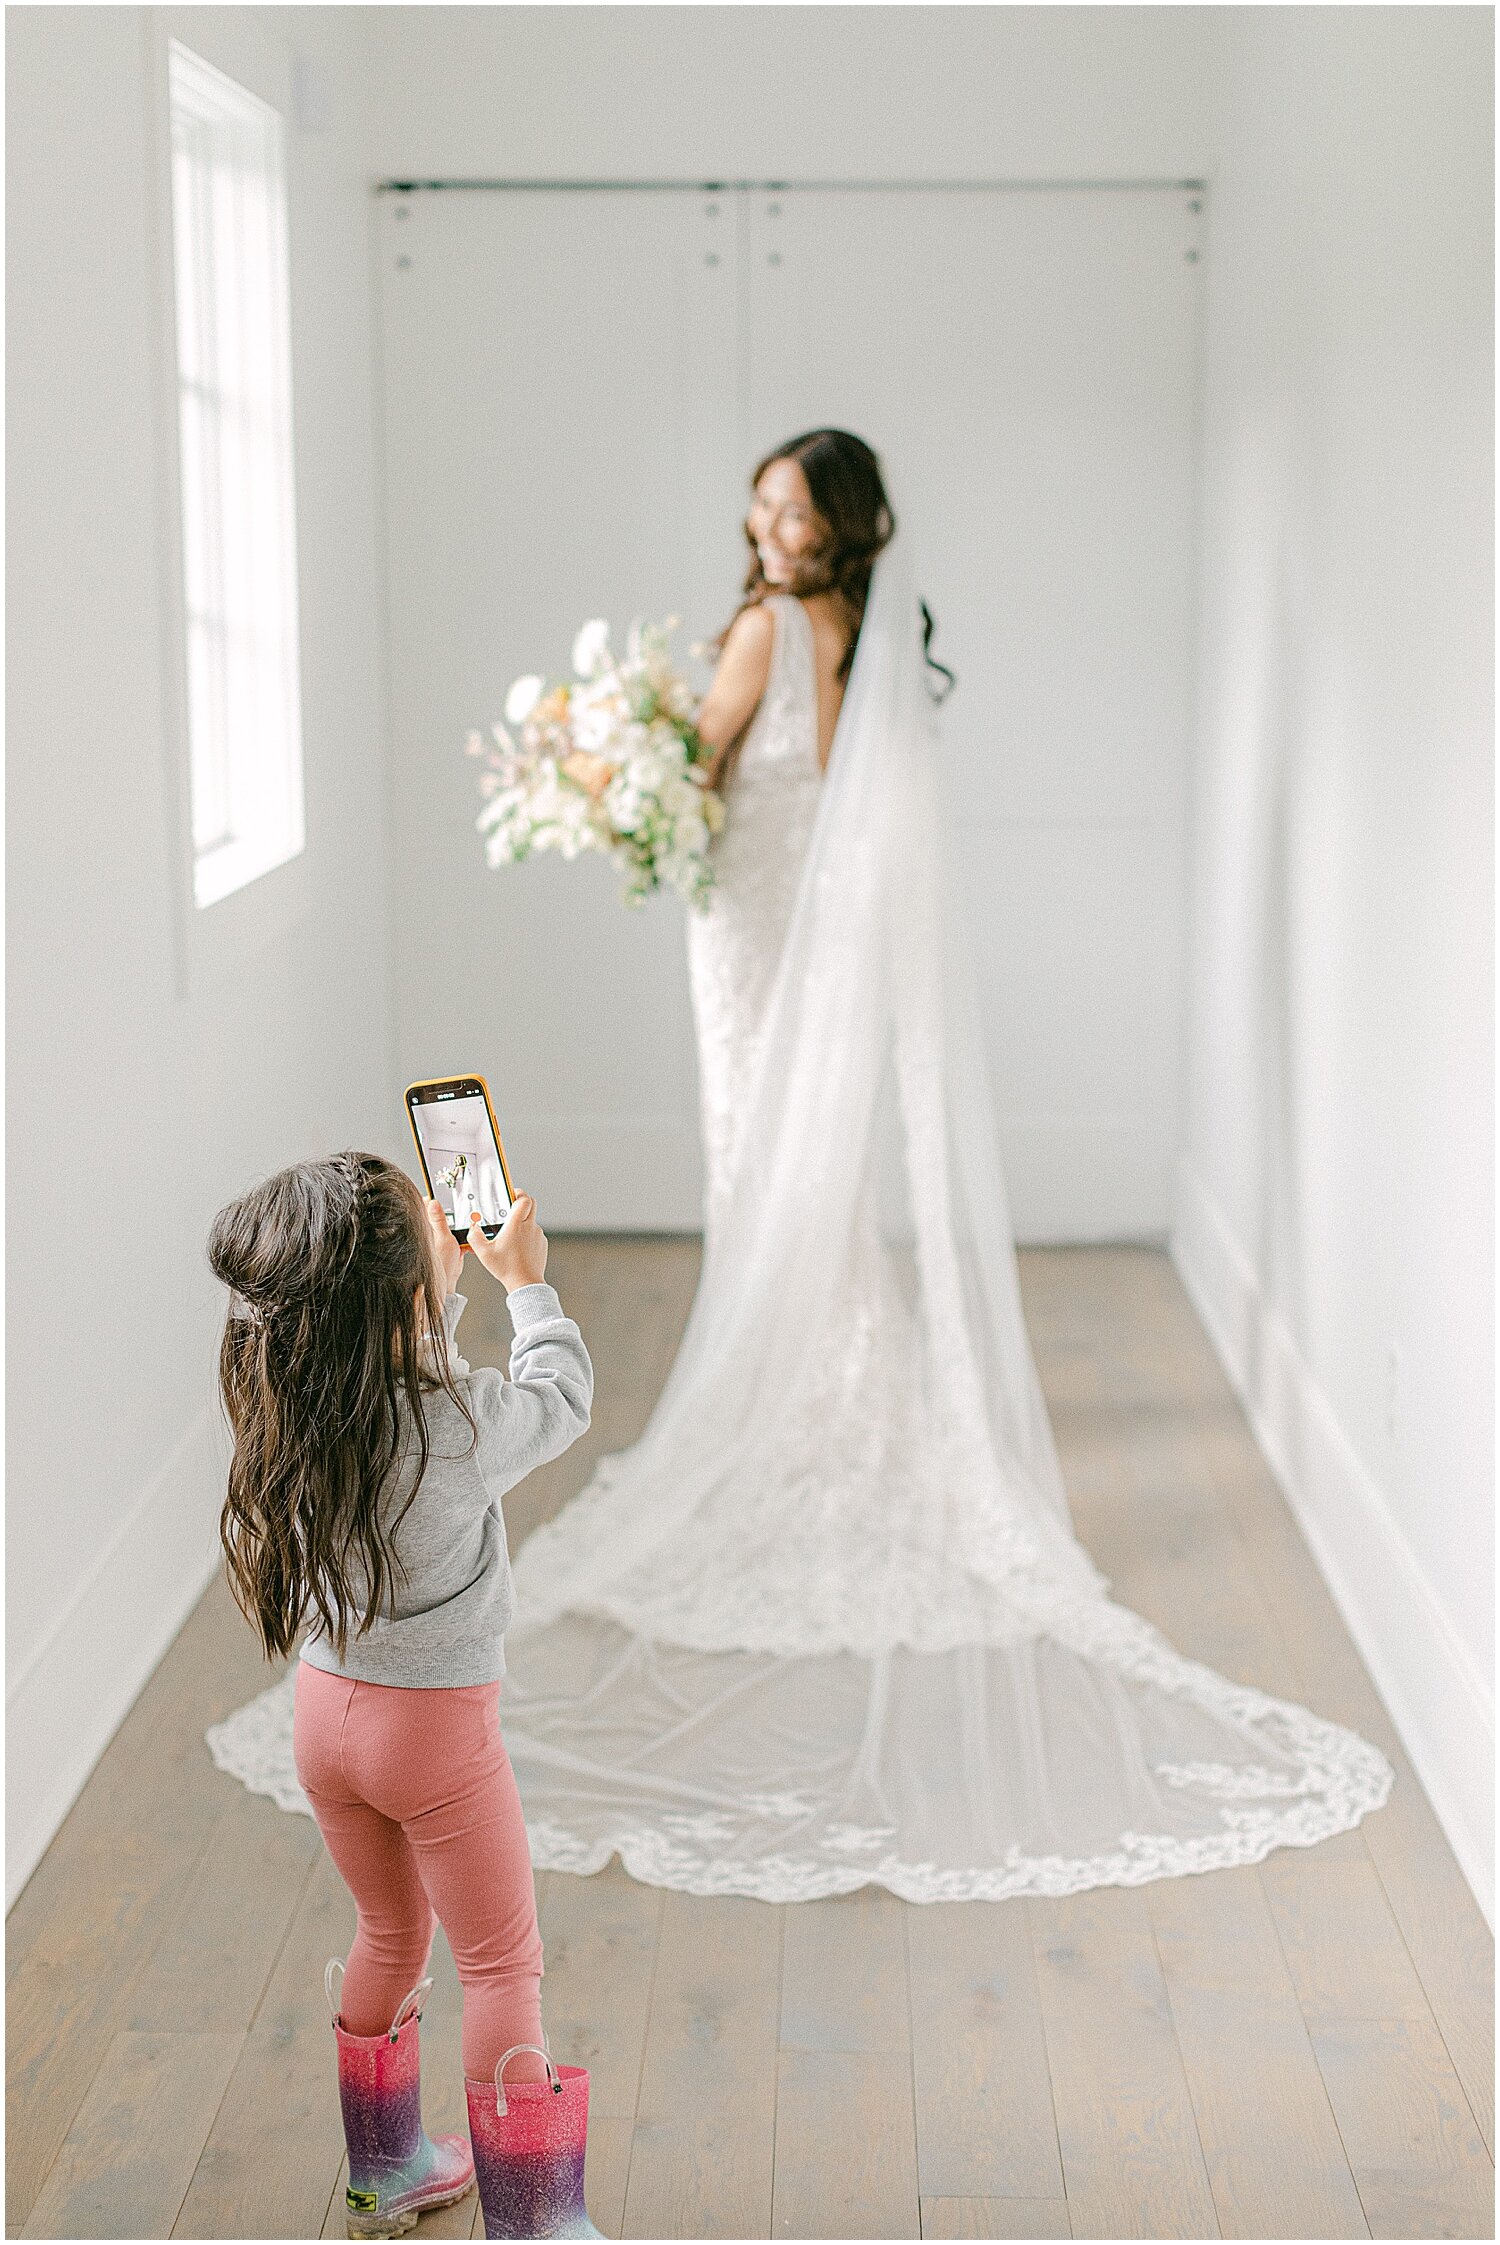  bride getting her picture taken in her wedding dress 